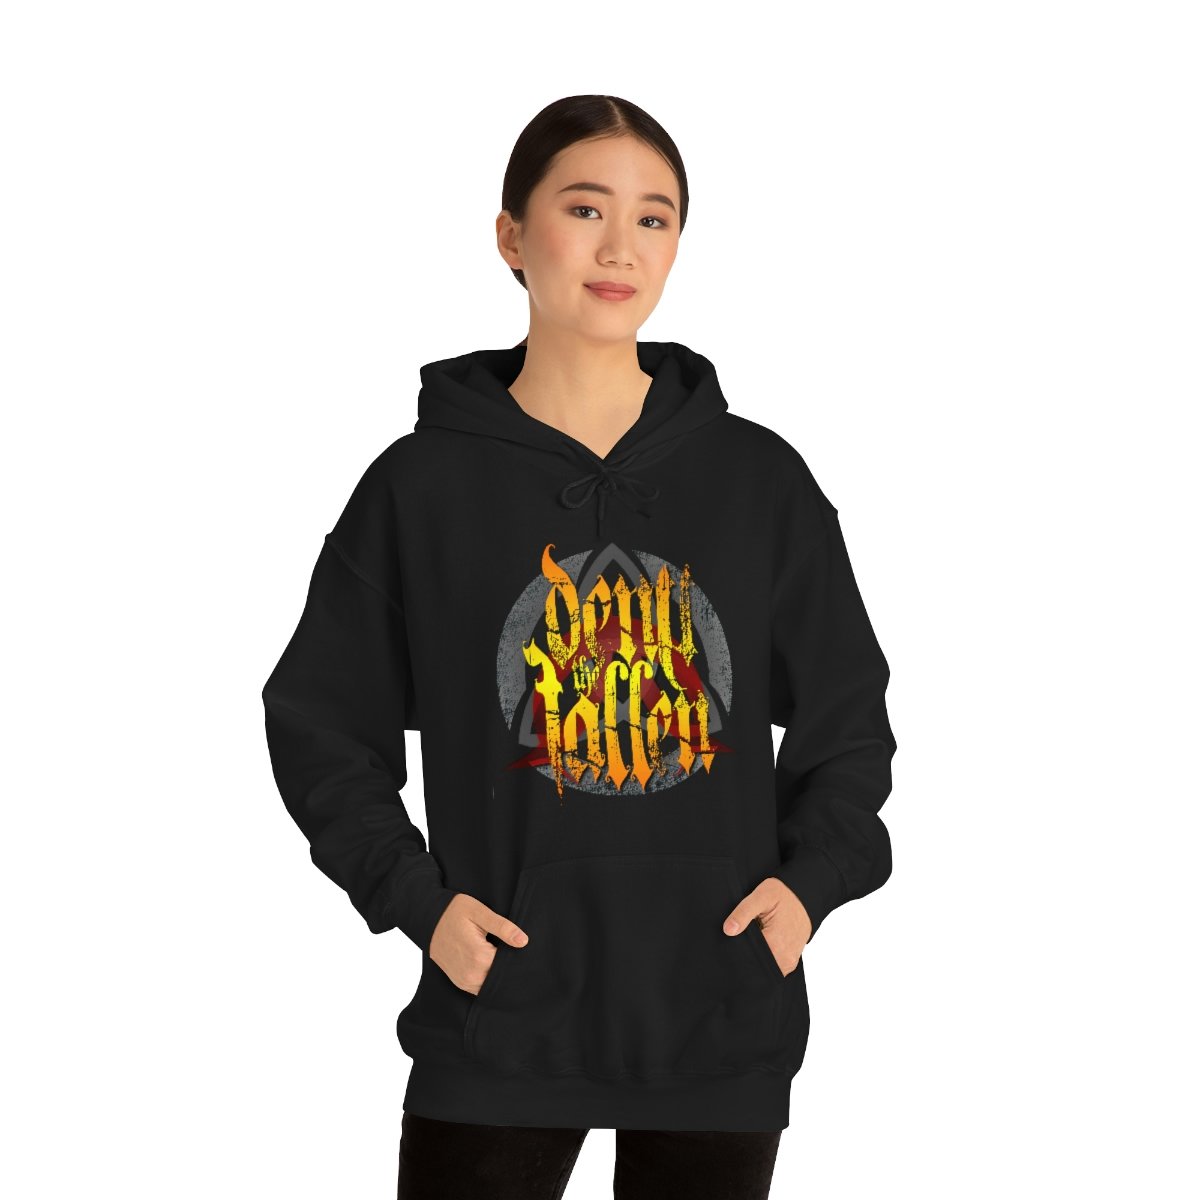 Deny The Fallen Tribal Logo Pullover Hooded Sweatshirt